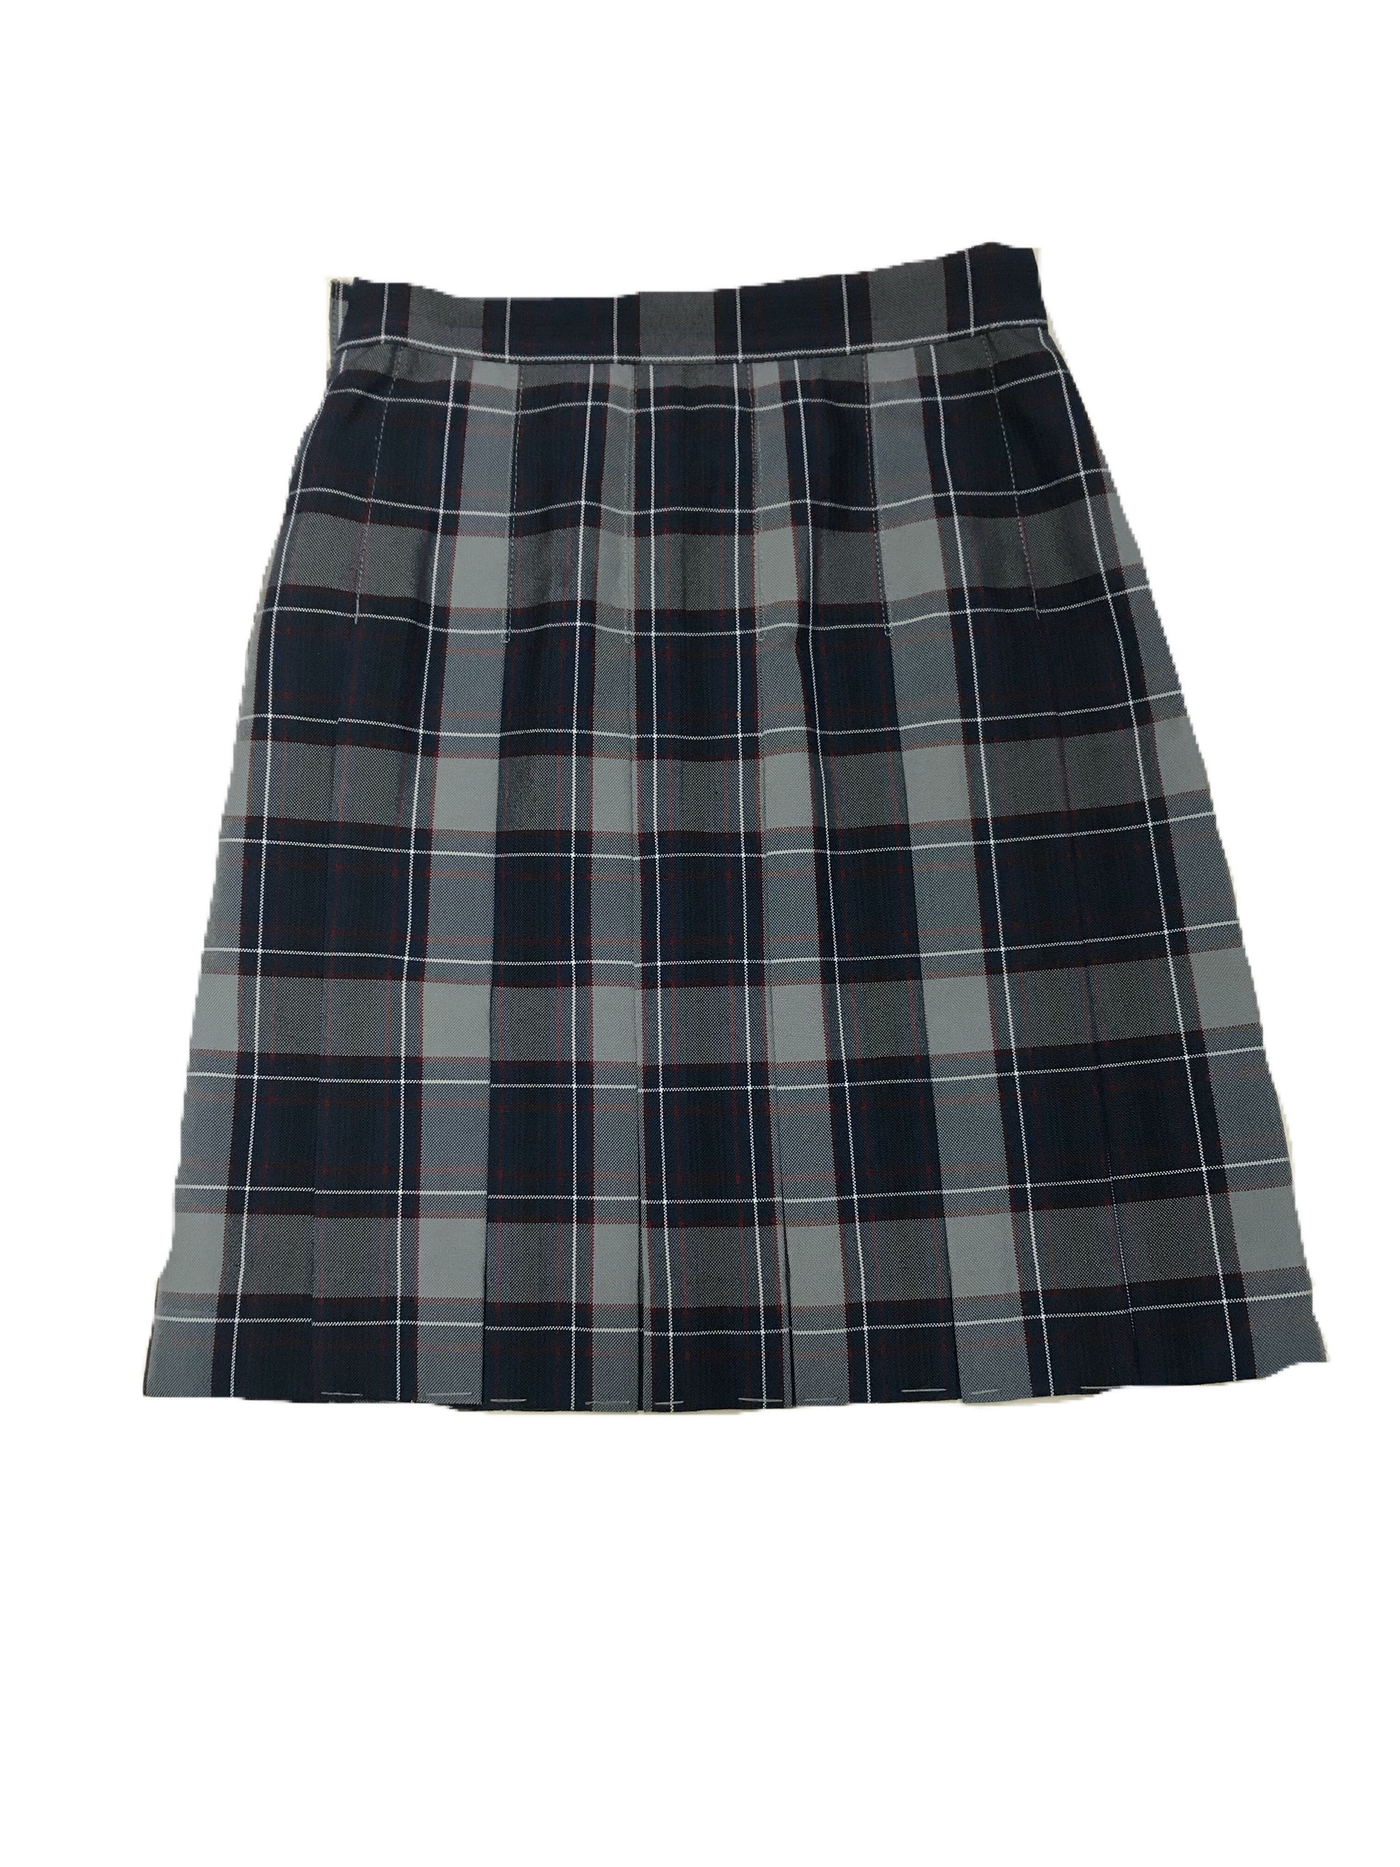 BA plaid skirt